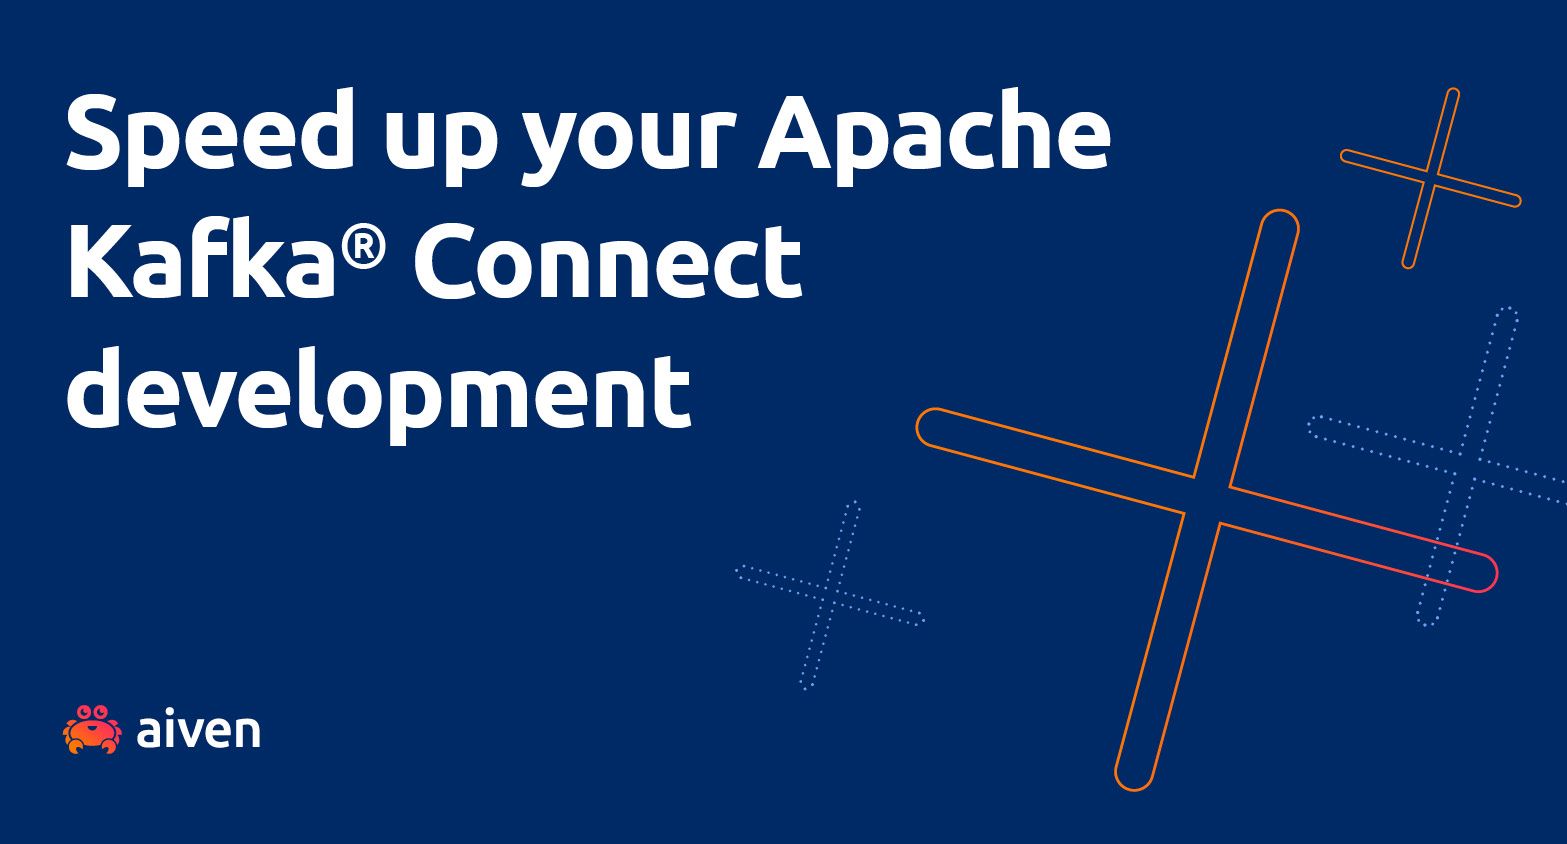 Apache Kafka® Connect configuration options